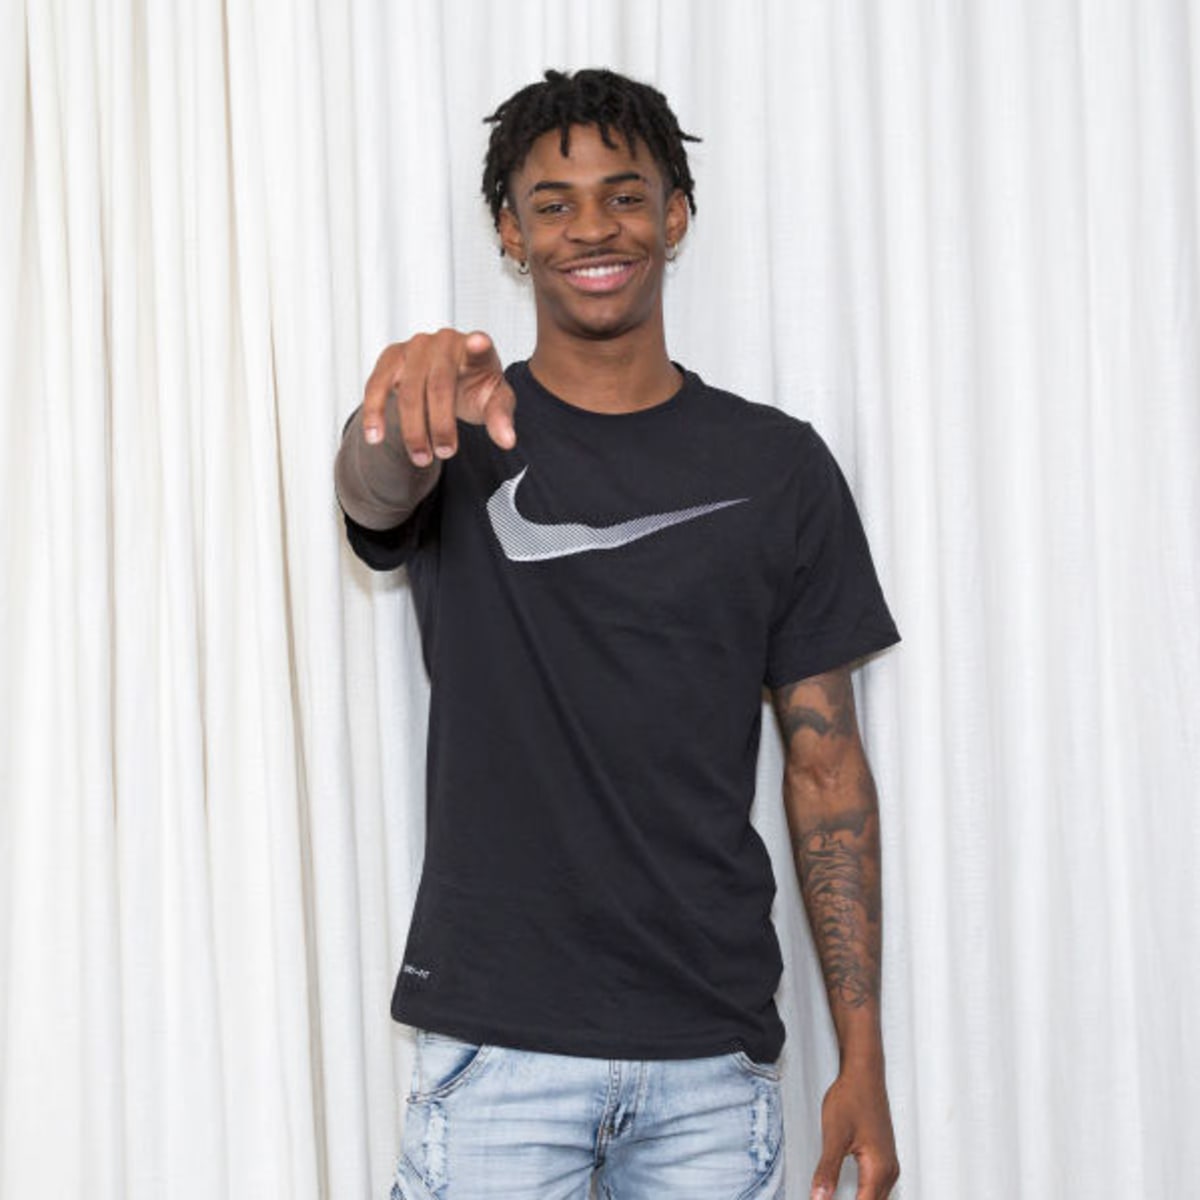 Ja Morant: NBA draft prospect signs with Nike